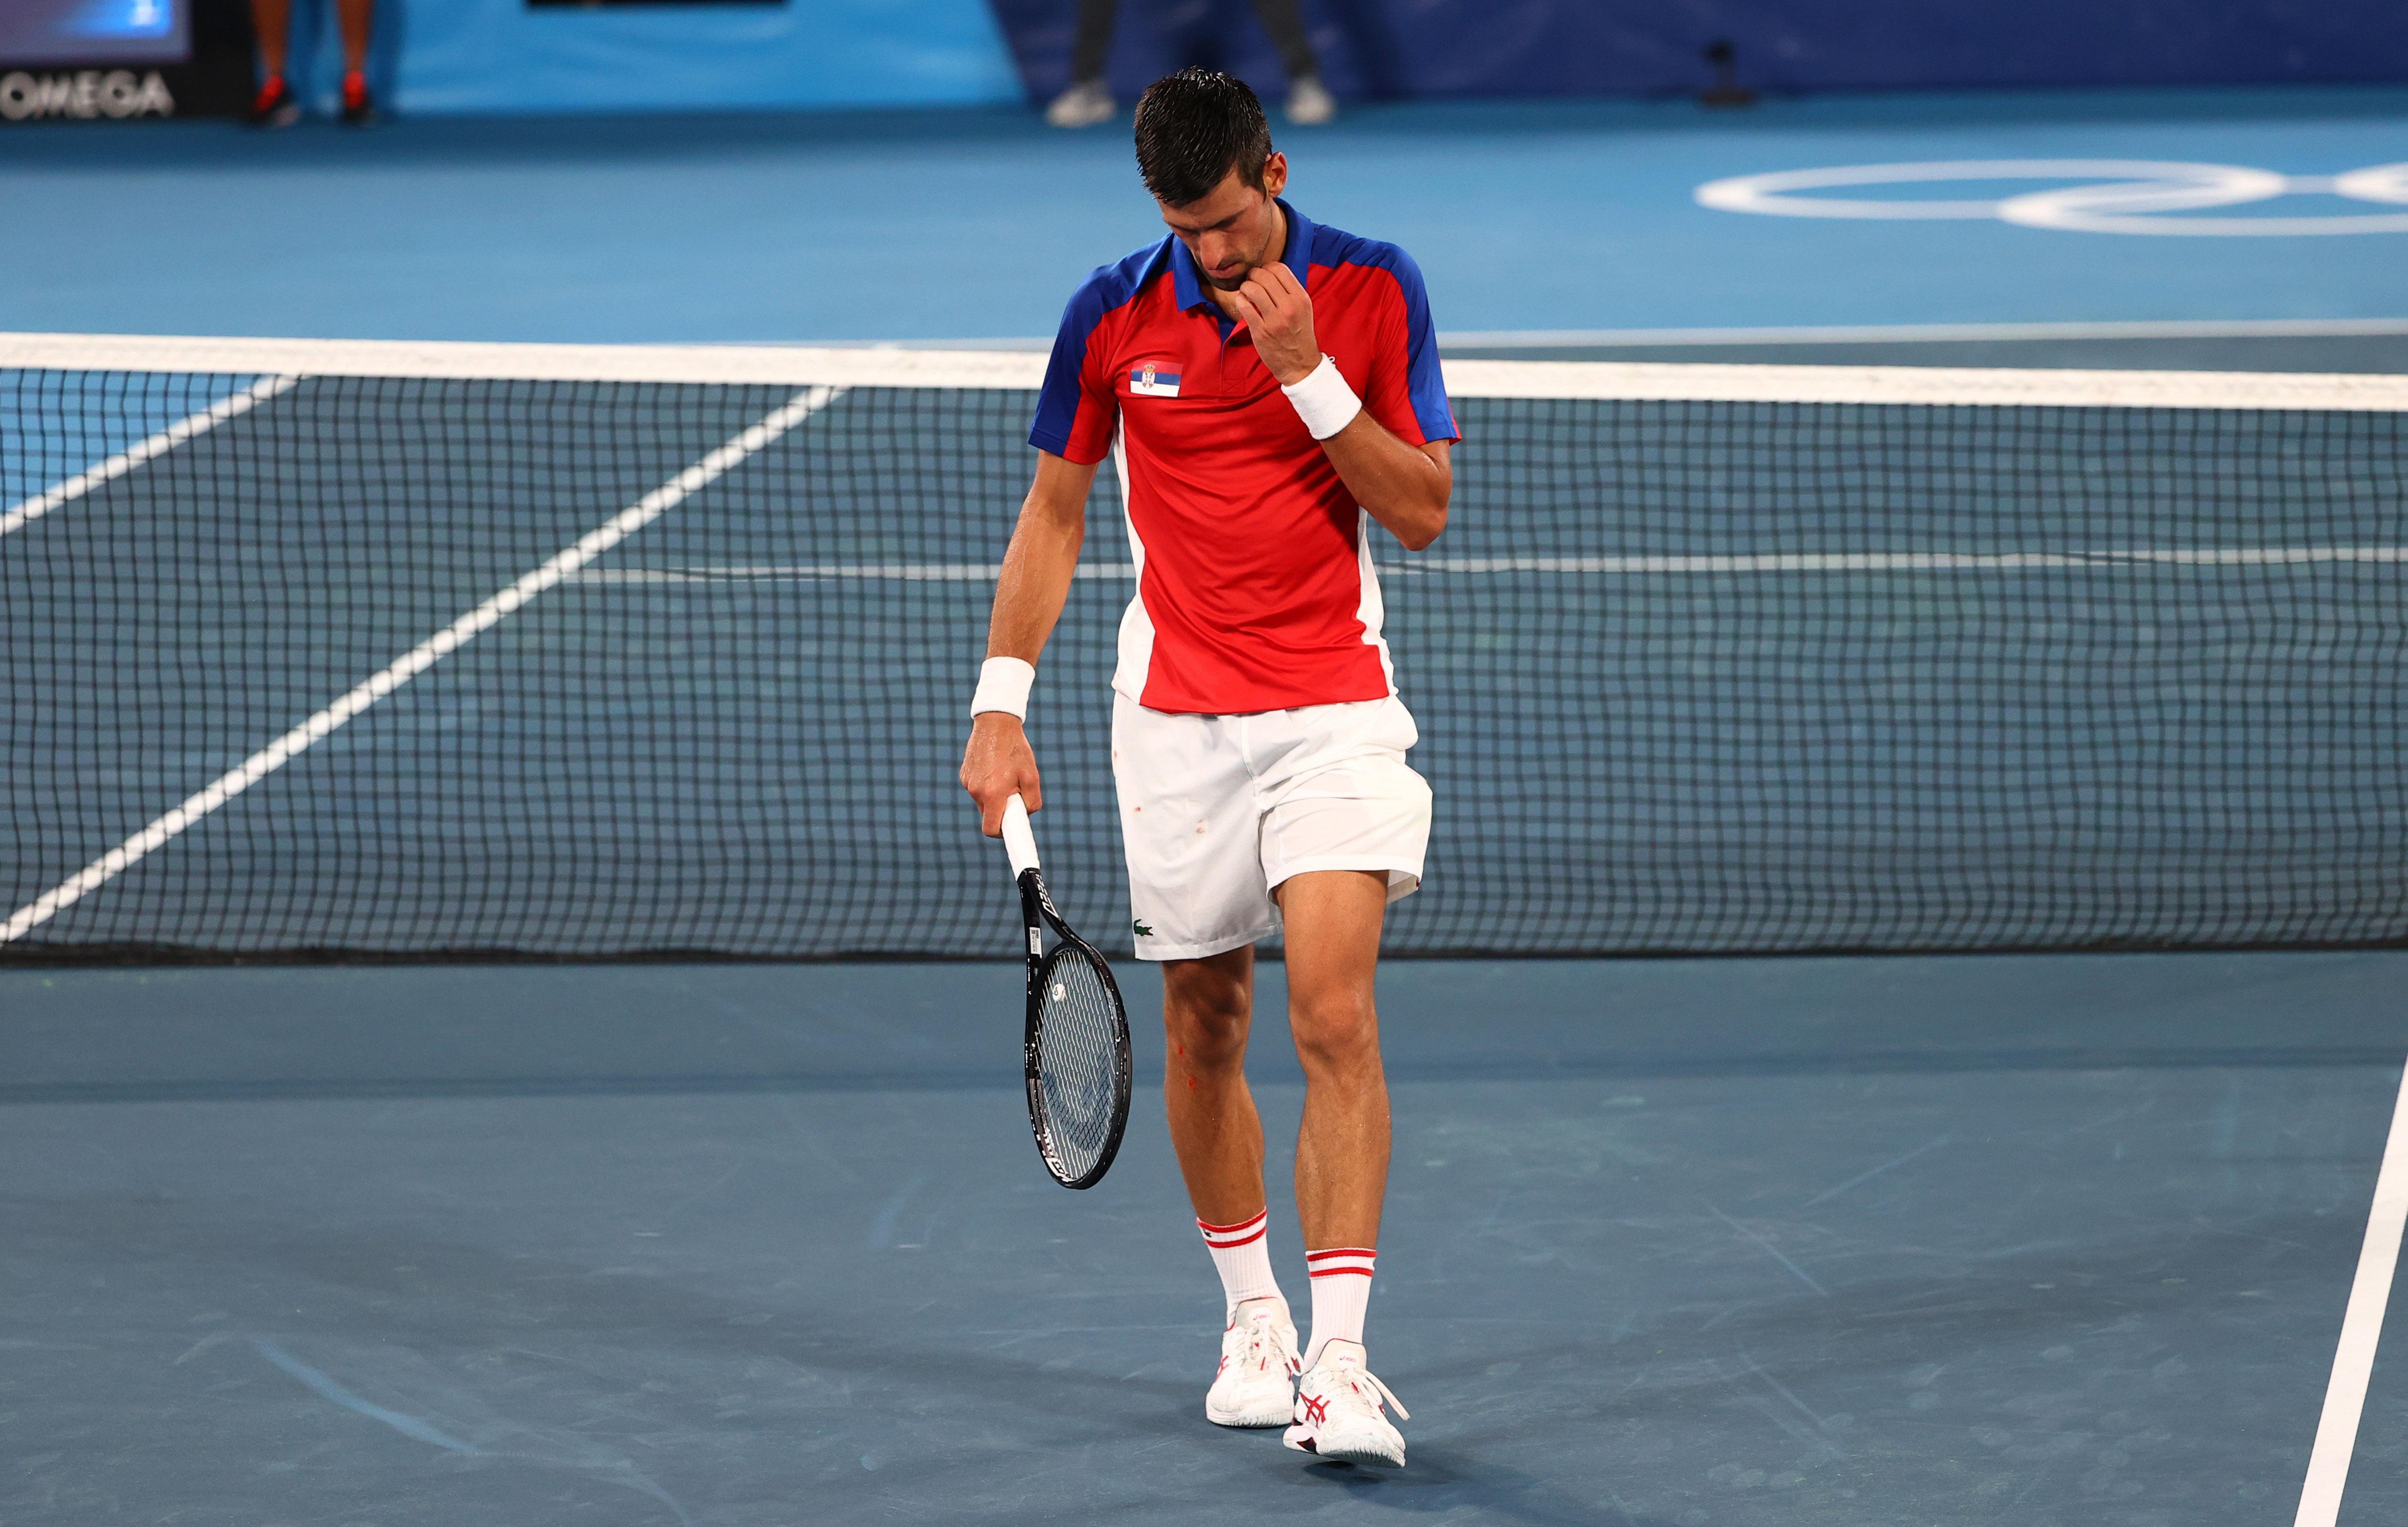 Djokovics Golden Slam dreams dashed by Zverev in Olympic tennis semis GMA News Online